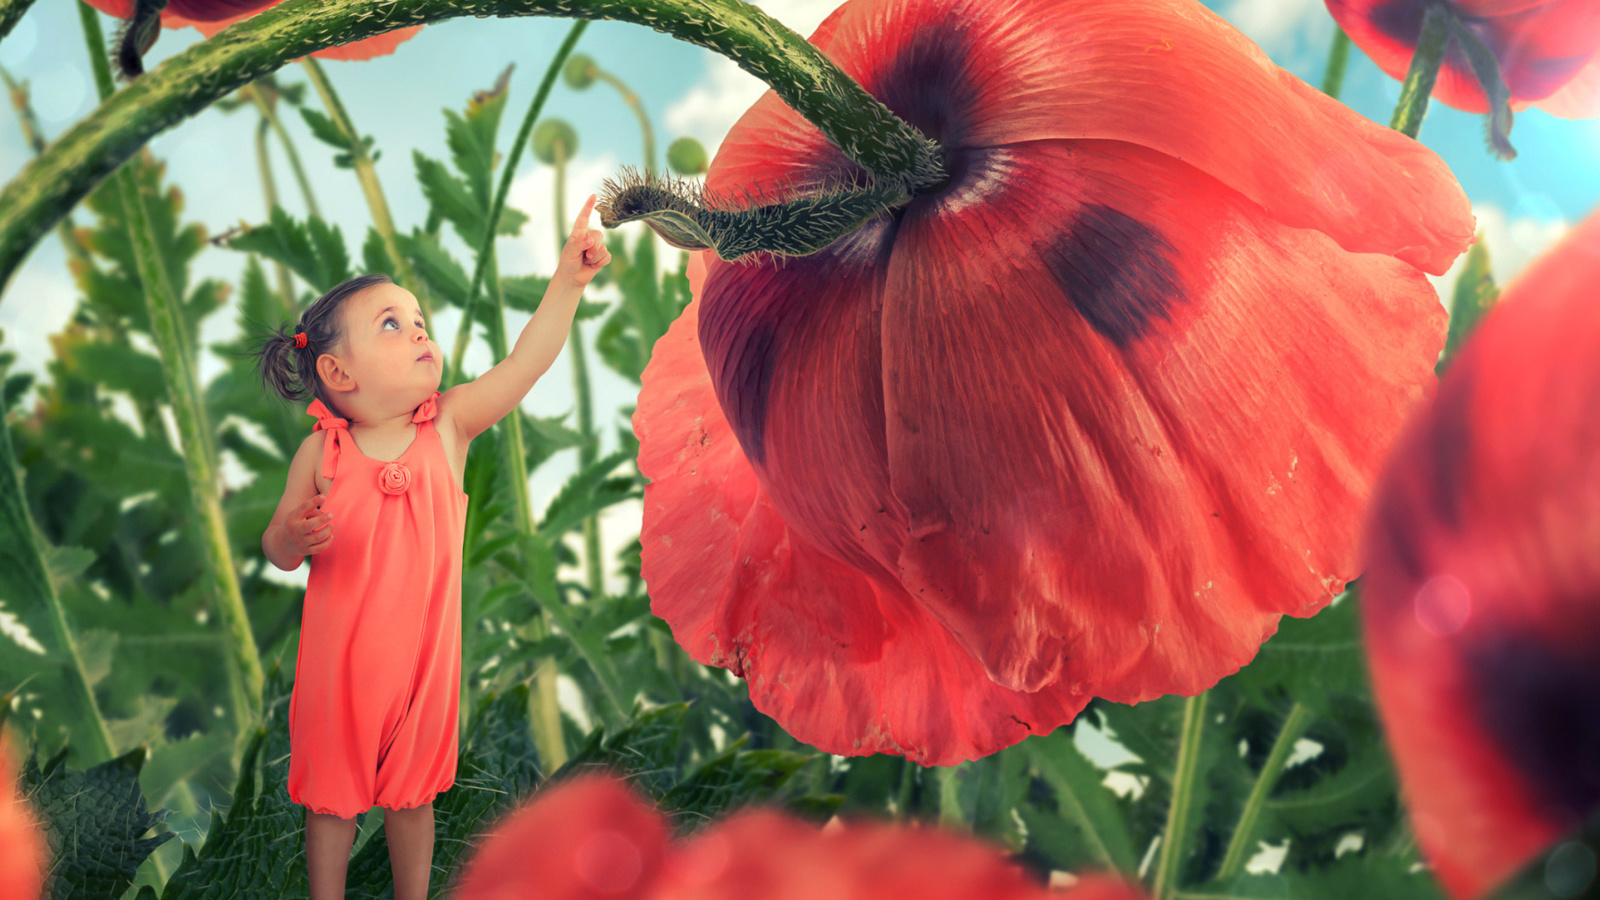 Little kid on poppy flower wallpaper 1600x900